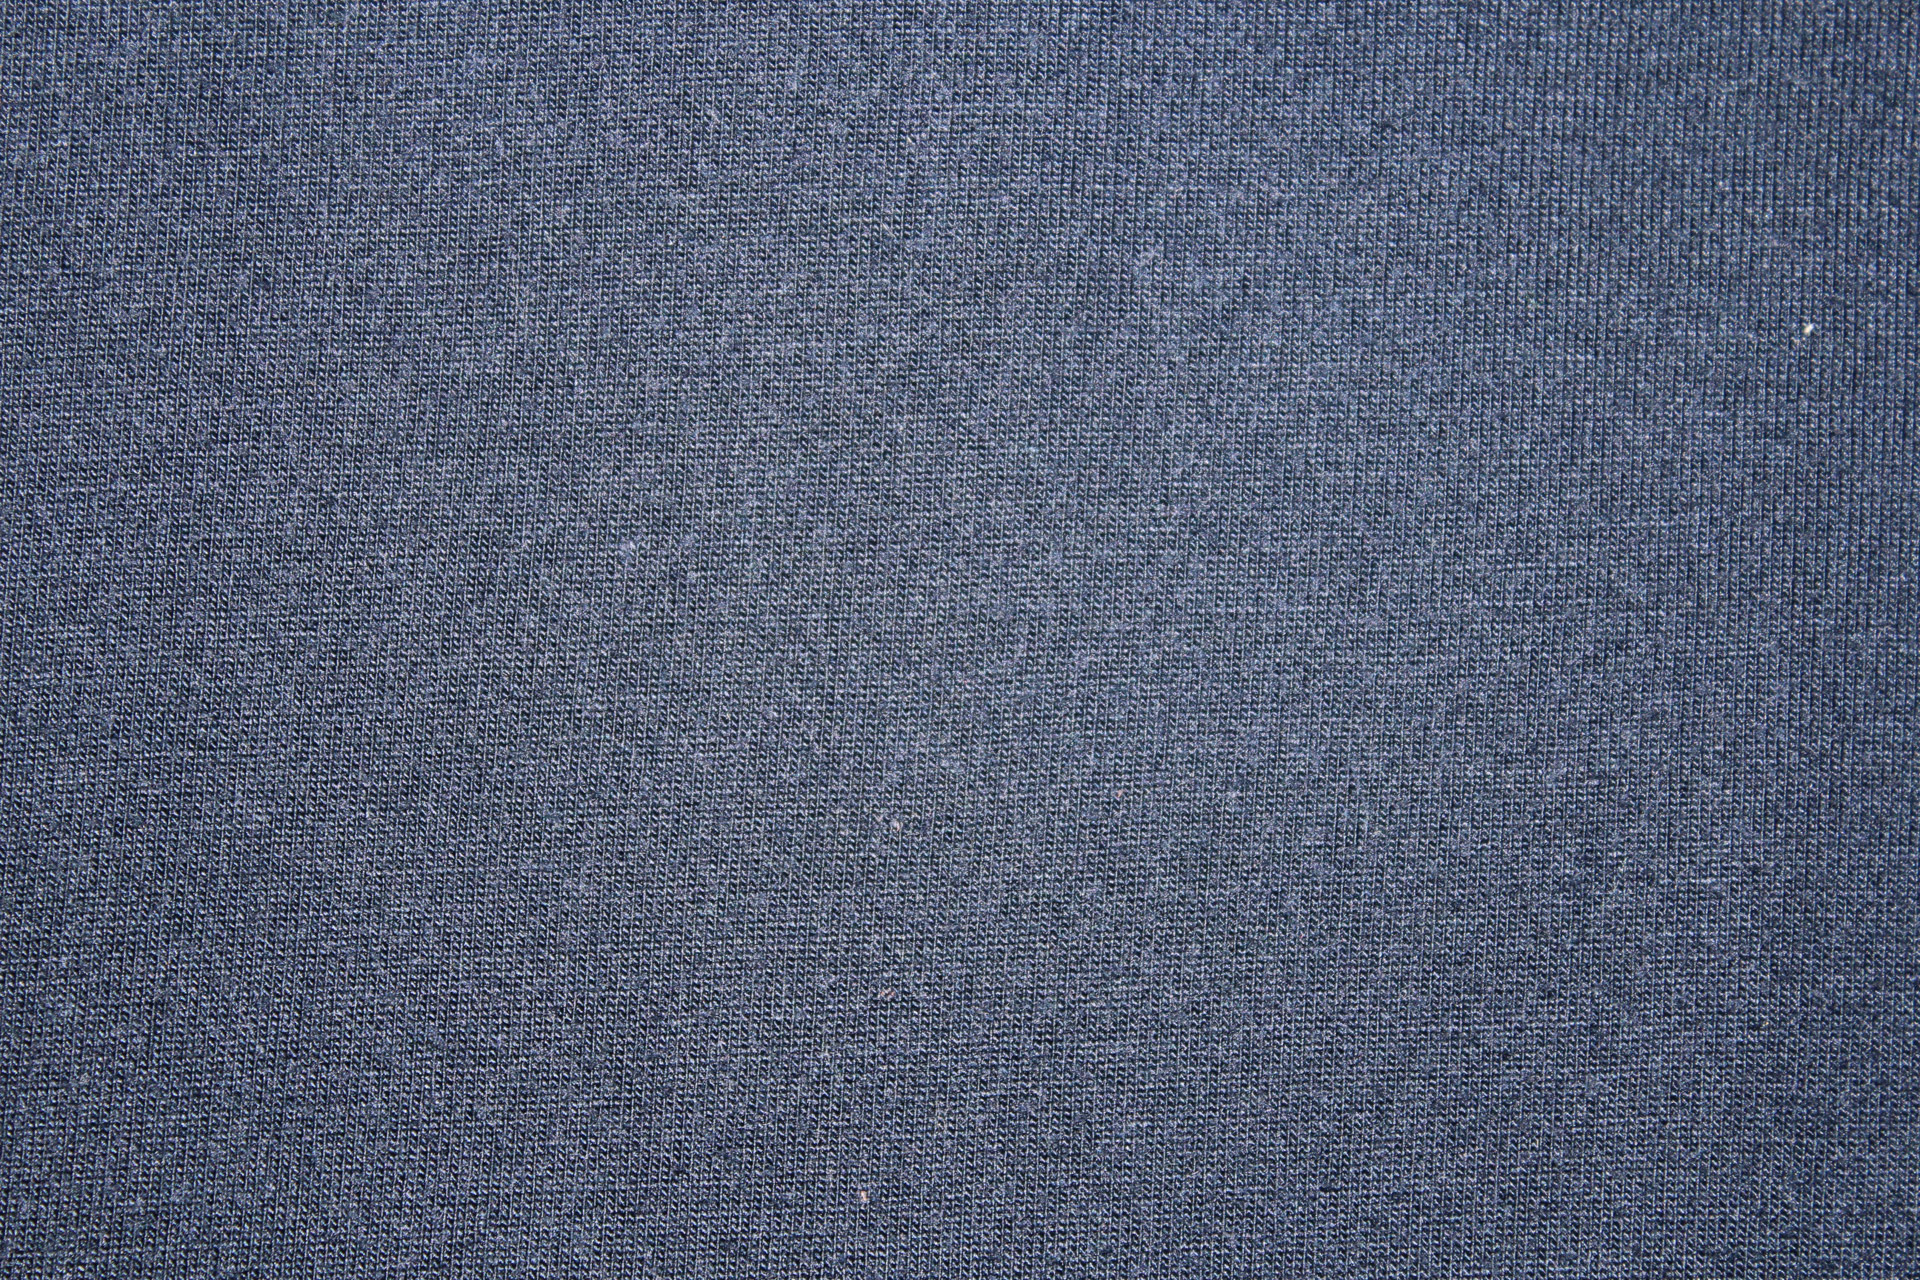 Blue Textile Background 6 Free Stock Photo - Public Domain Pictures